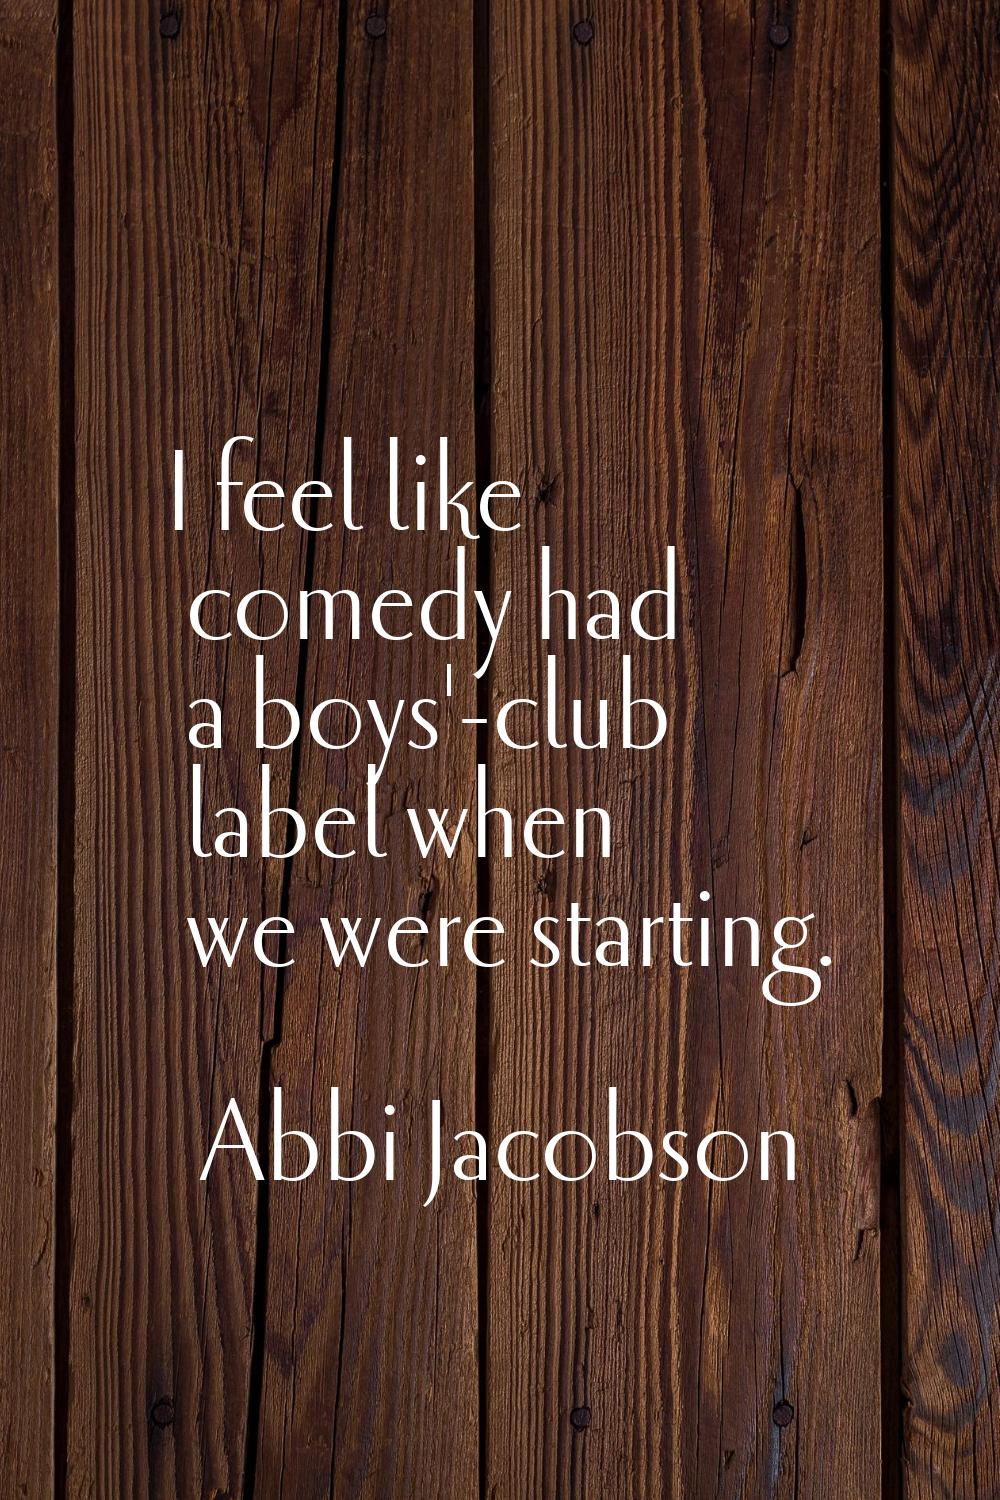 I feel like comedy had a boys'-club label when we were starting.